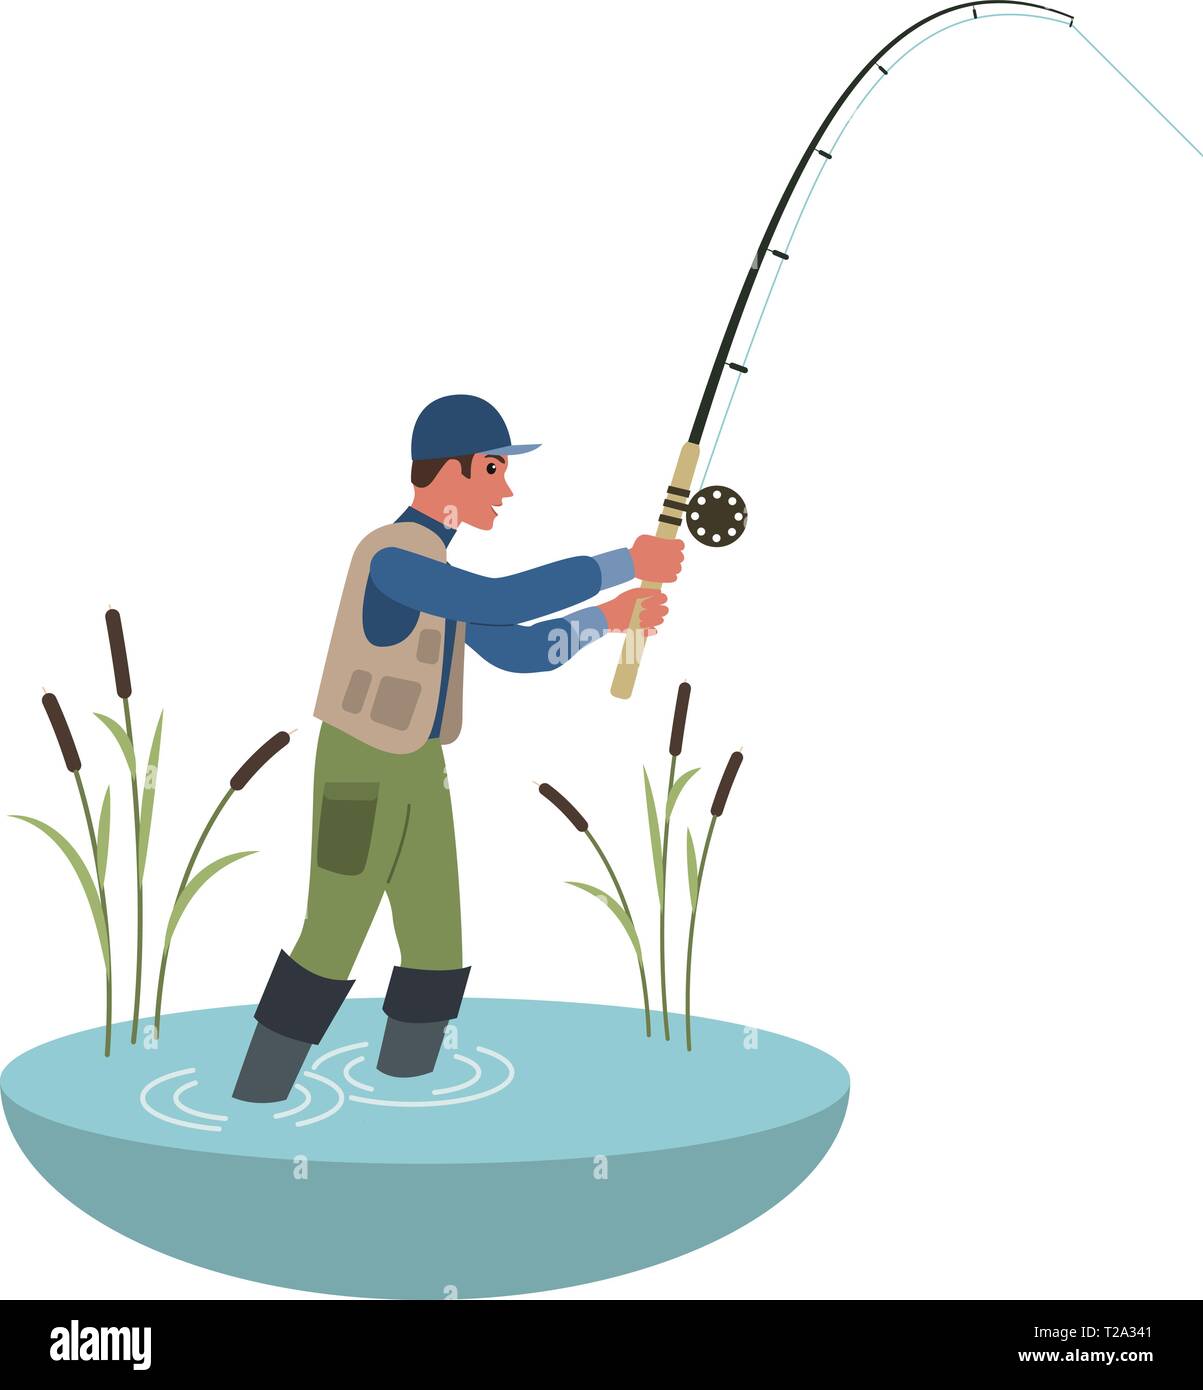 https://c8.alamy.com/comp/T2A341/fisherman-holding-fishing-rod-flat-style-colorful-cartoon-illustration-eps10-T2A341.jpg